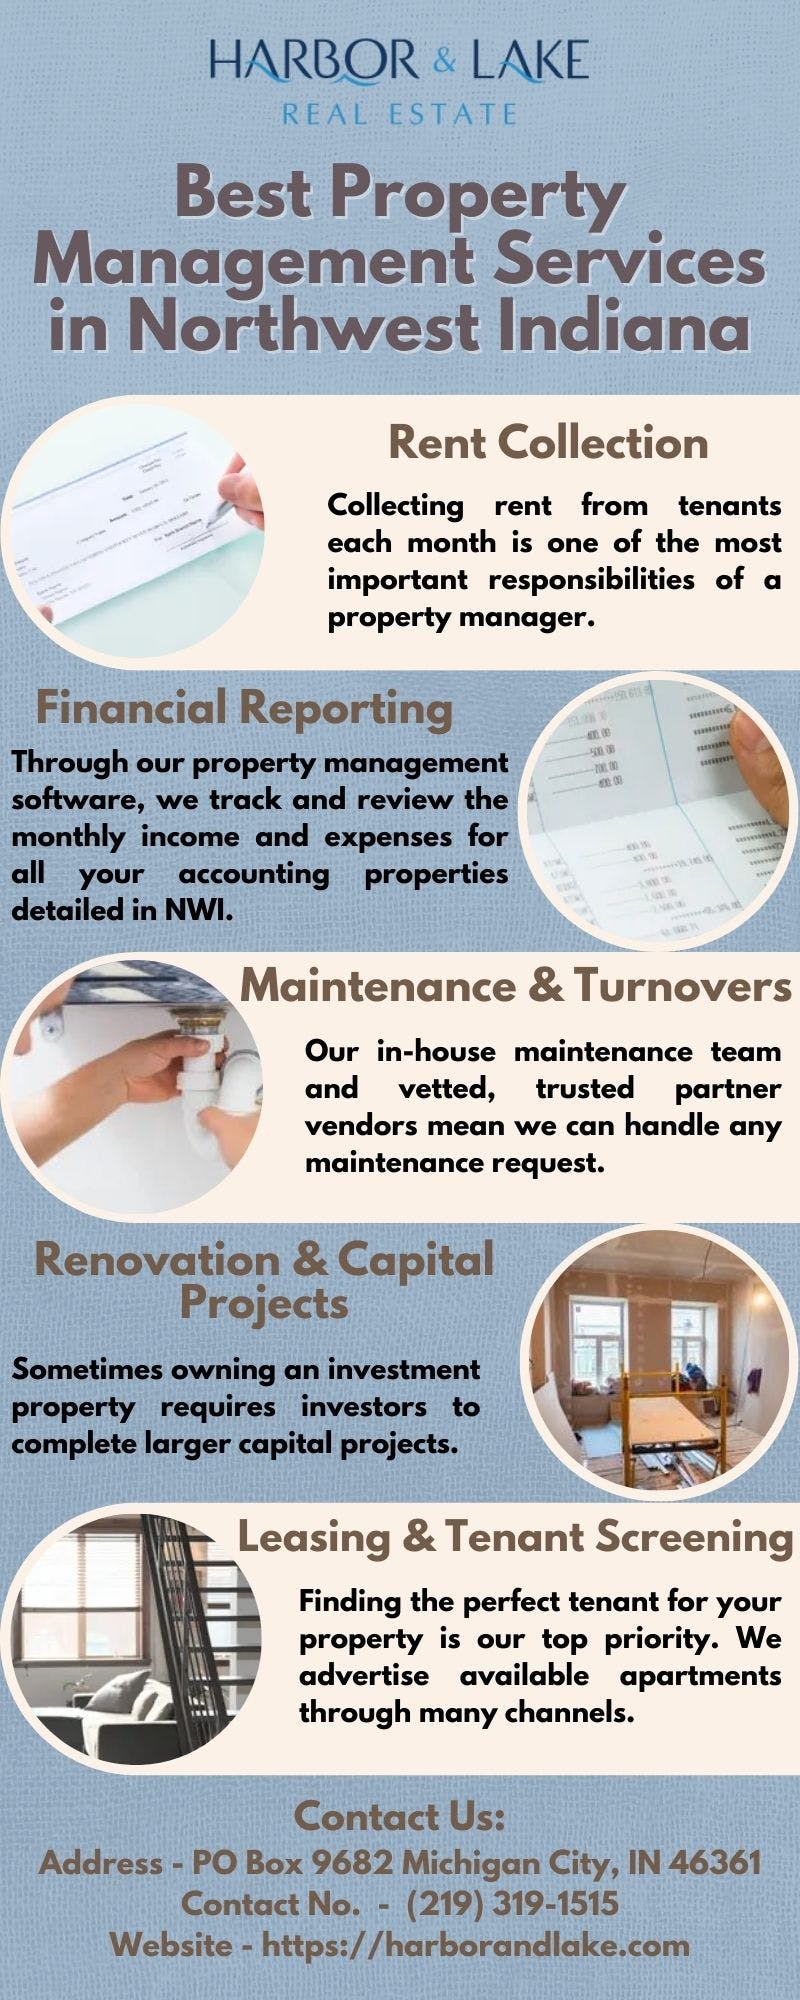 Best Property Management Services in Northwest Indiana.jpg